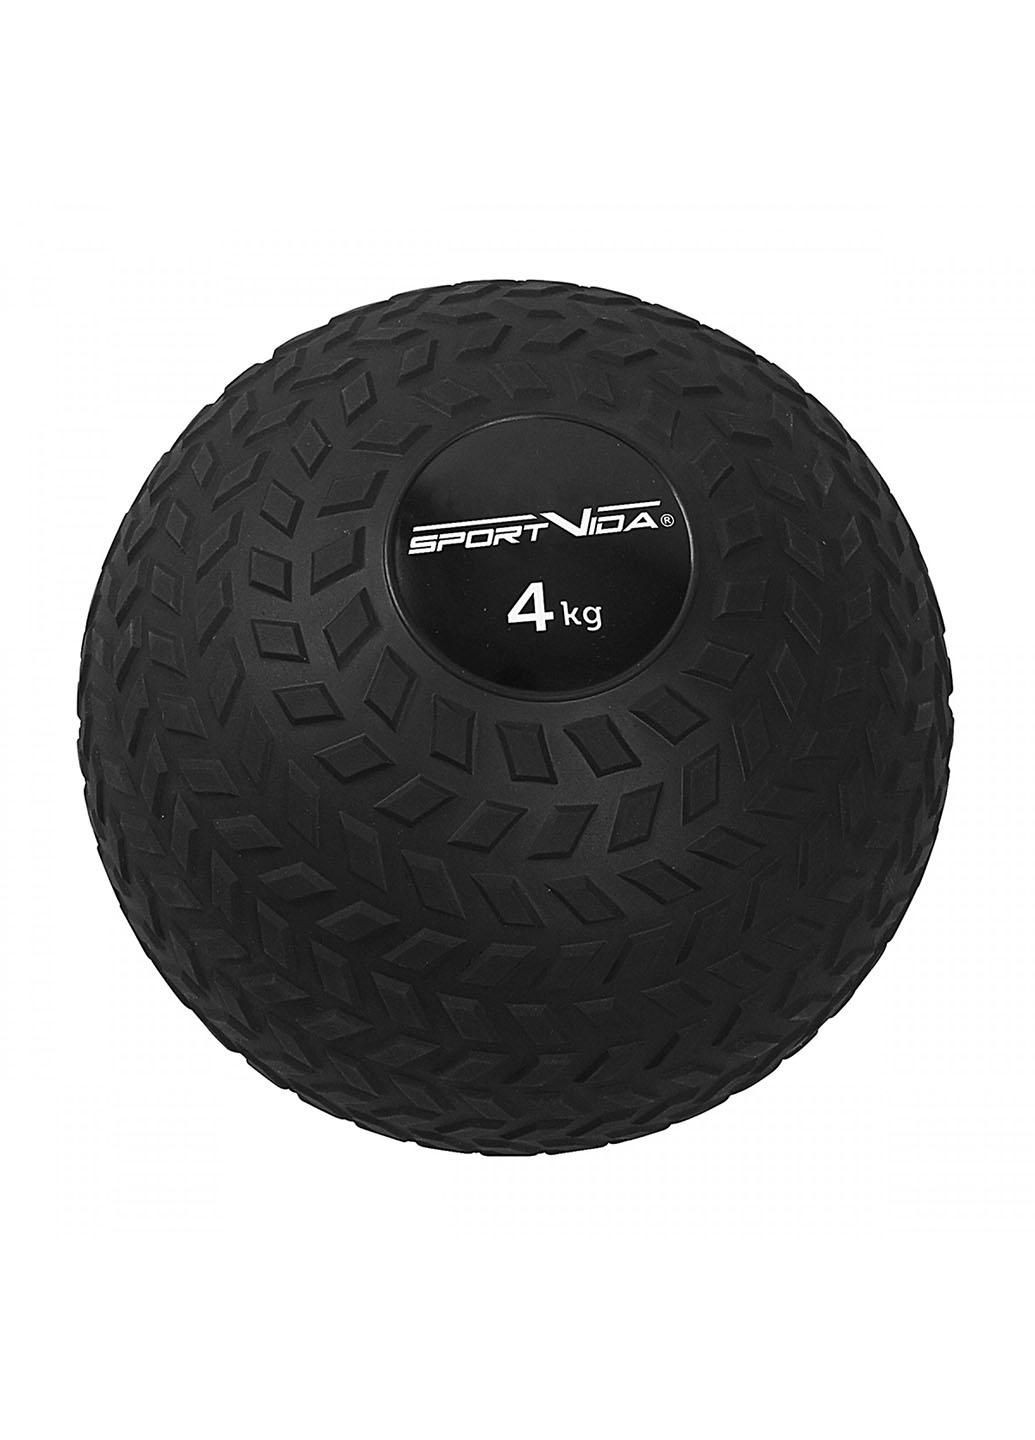 Слэмбол (медицинский мяч) для кроссфита Slam Ball 4 кг SV-HK0346 Black SportVida (279303111)